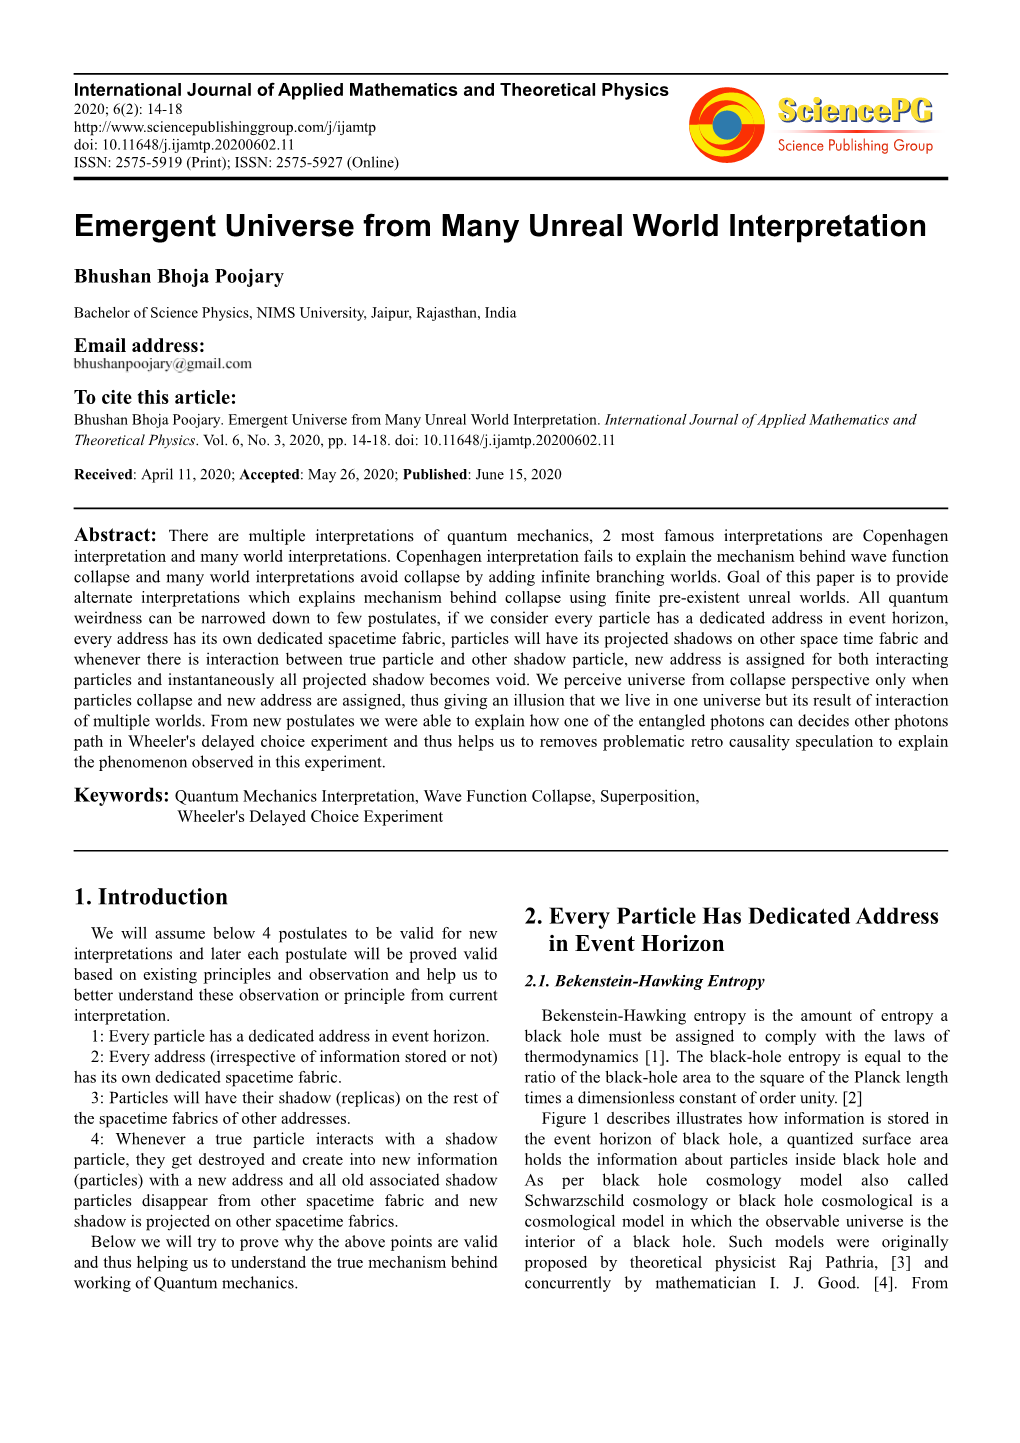 Emergent Universe from Many Unreal World Interpretation